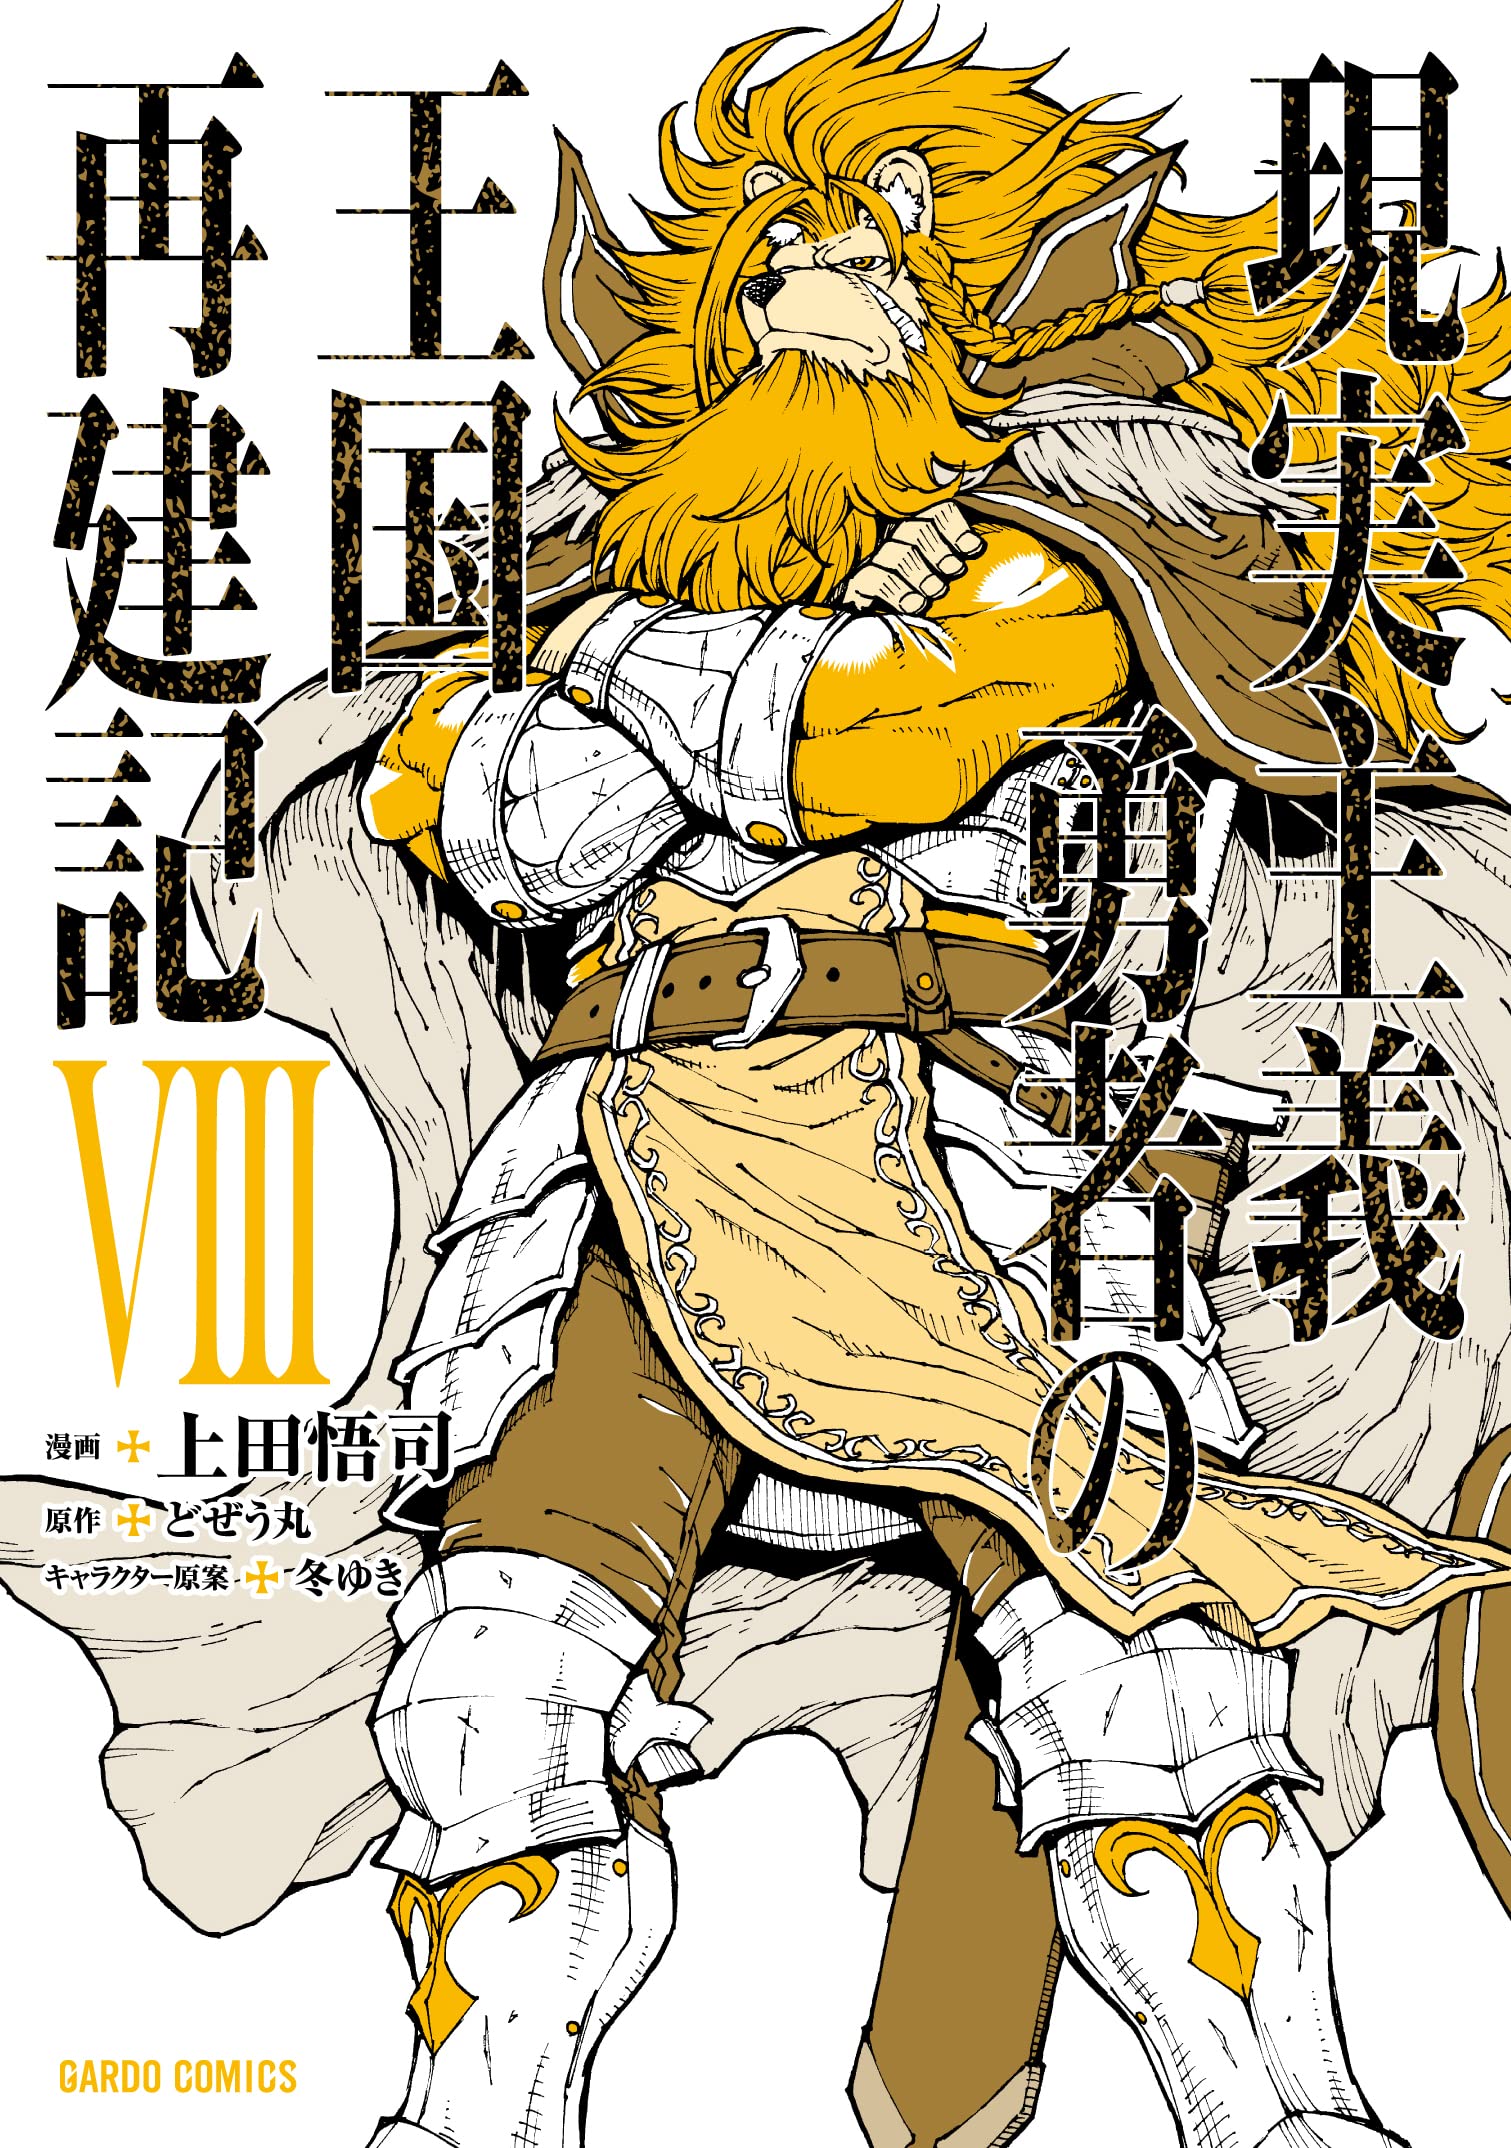 How a Realist Hero Rebuilt the Kingdom (Genjitsu Shugi Yuusha no Oukoku  Saikenki) VIII – Japanese Book Store